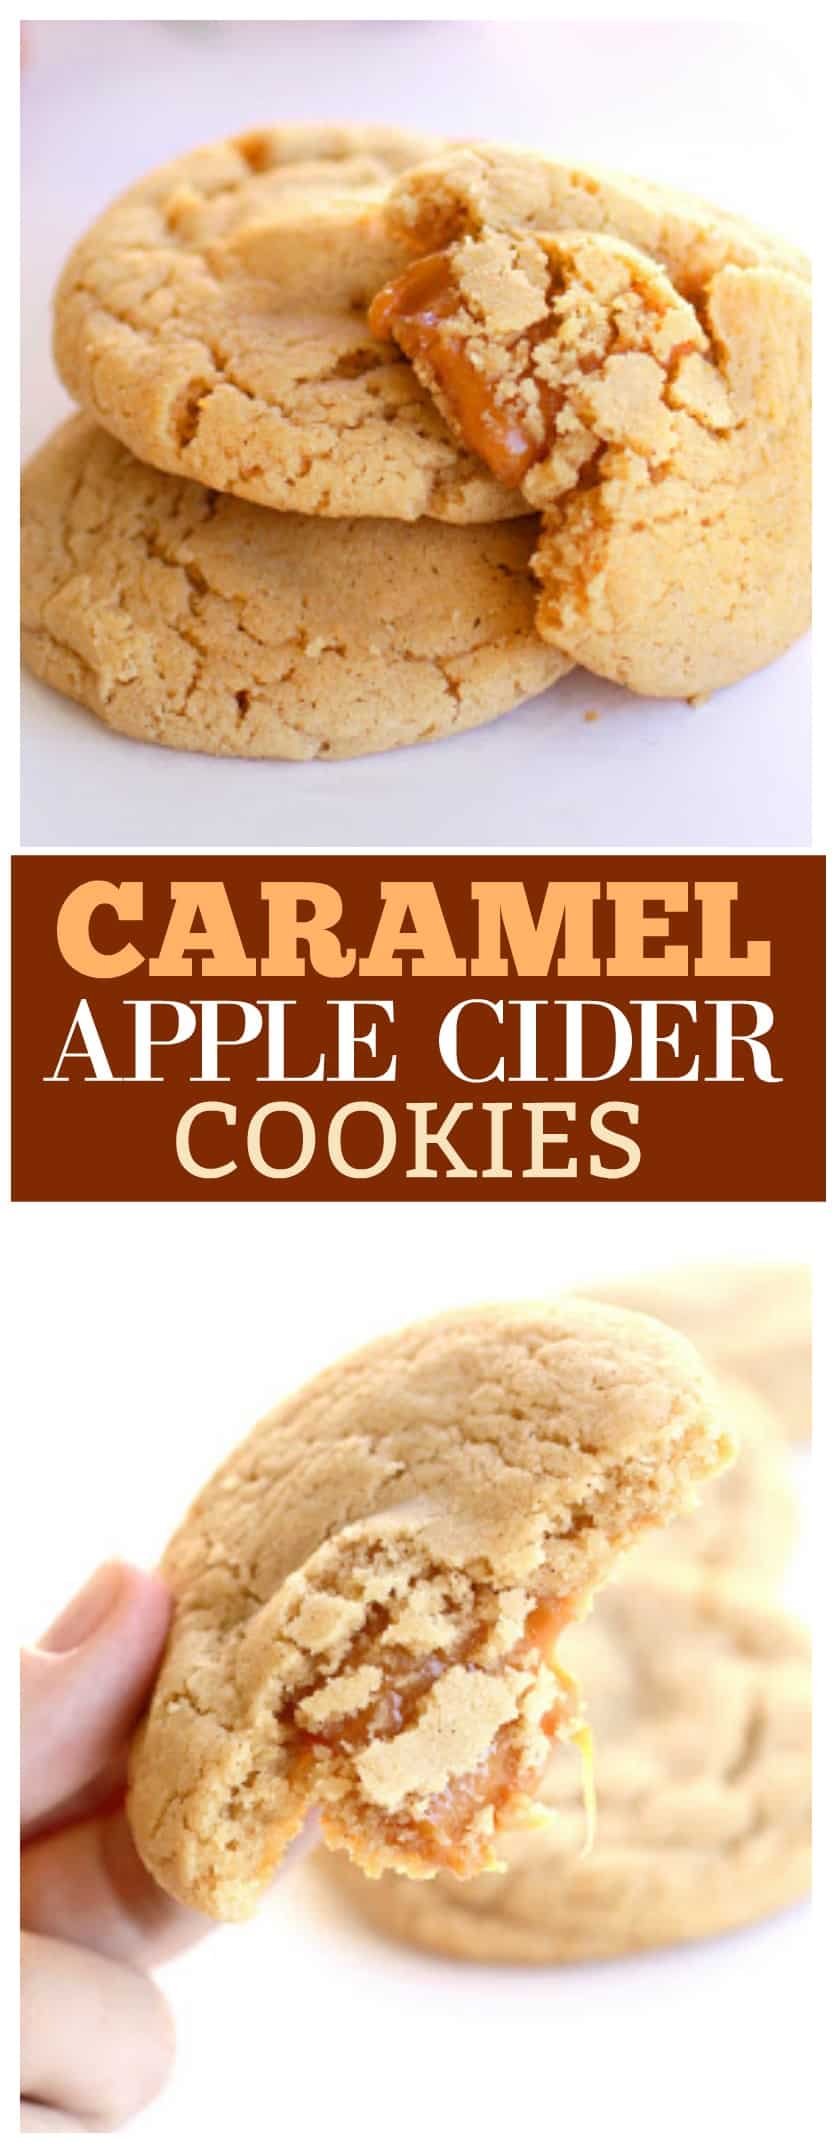 Caramel Apple Cider Cookies